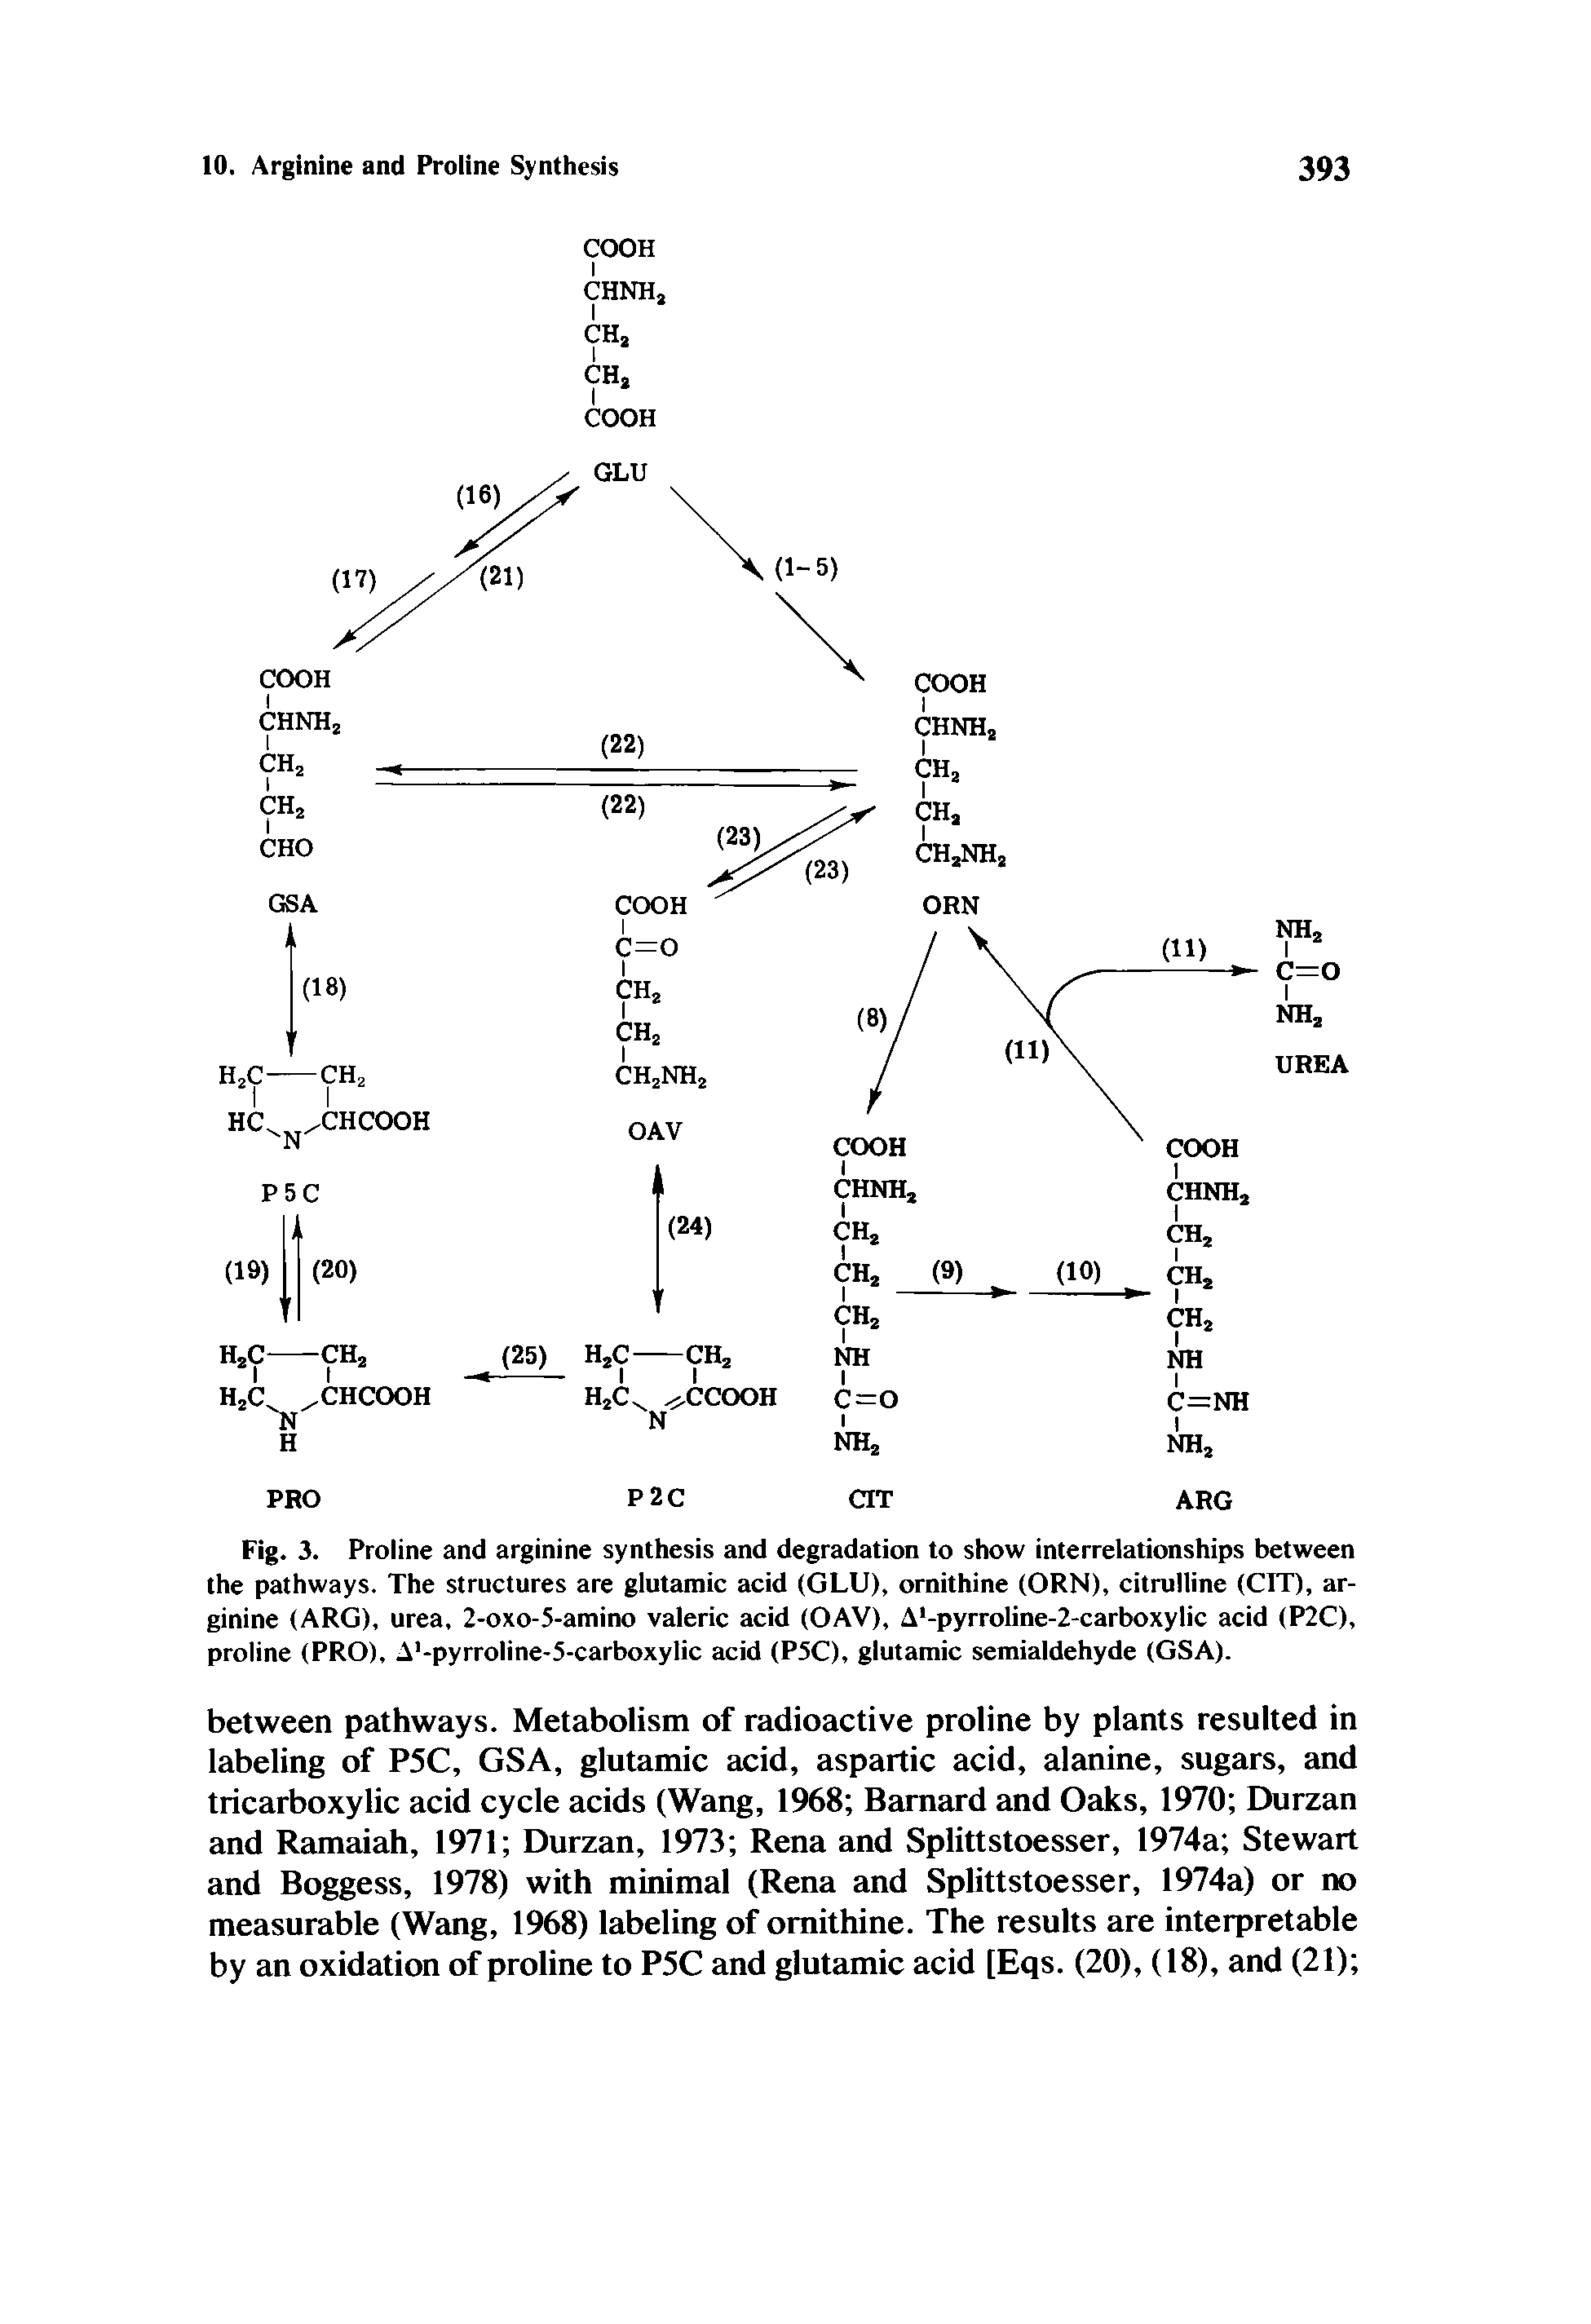 Fig. 3. Proline and arginine synthesis and degradation to show interrelationships between the pathways. The structures are glutamic acid (GLU), ornithine (ORN), citrulline (CIT), arginine (ARG), urea. 2-oxo-5-amino valeric acid (OAV), A -pyrroline-2-carboxylic acid (P2C), proline (PRO), A -pyrroline-5-carboxylic acid (P5C), glutamic semialdehyde (GSA).